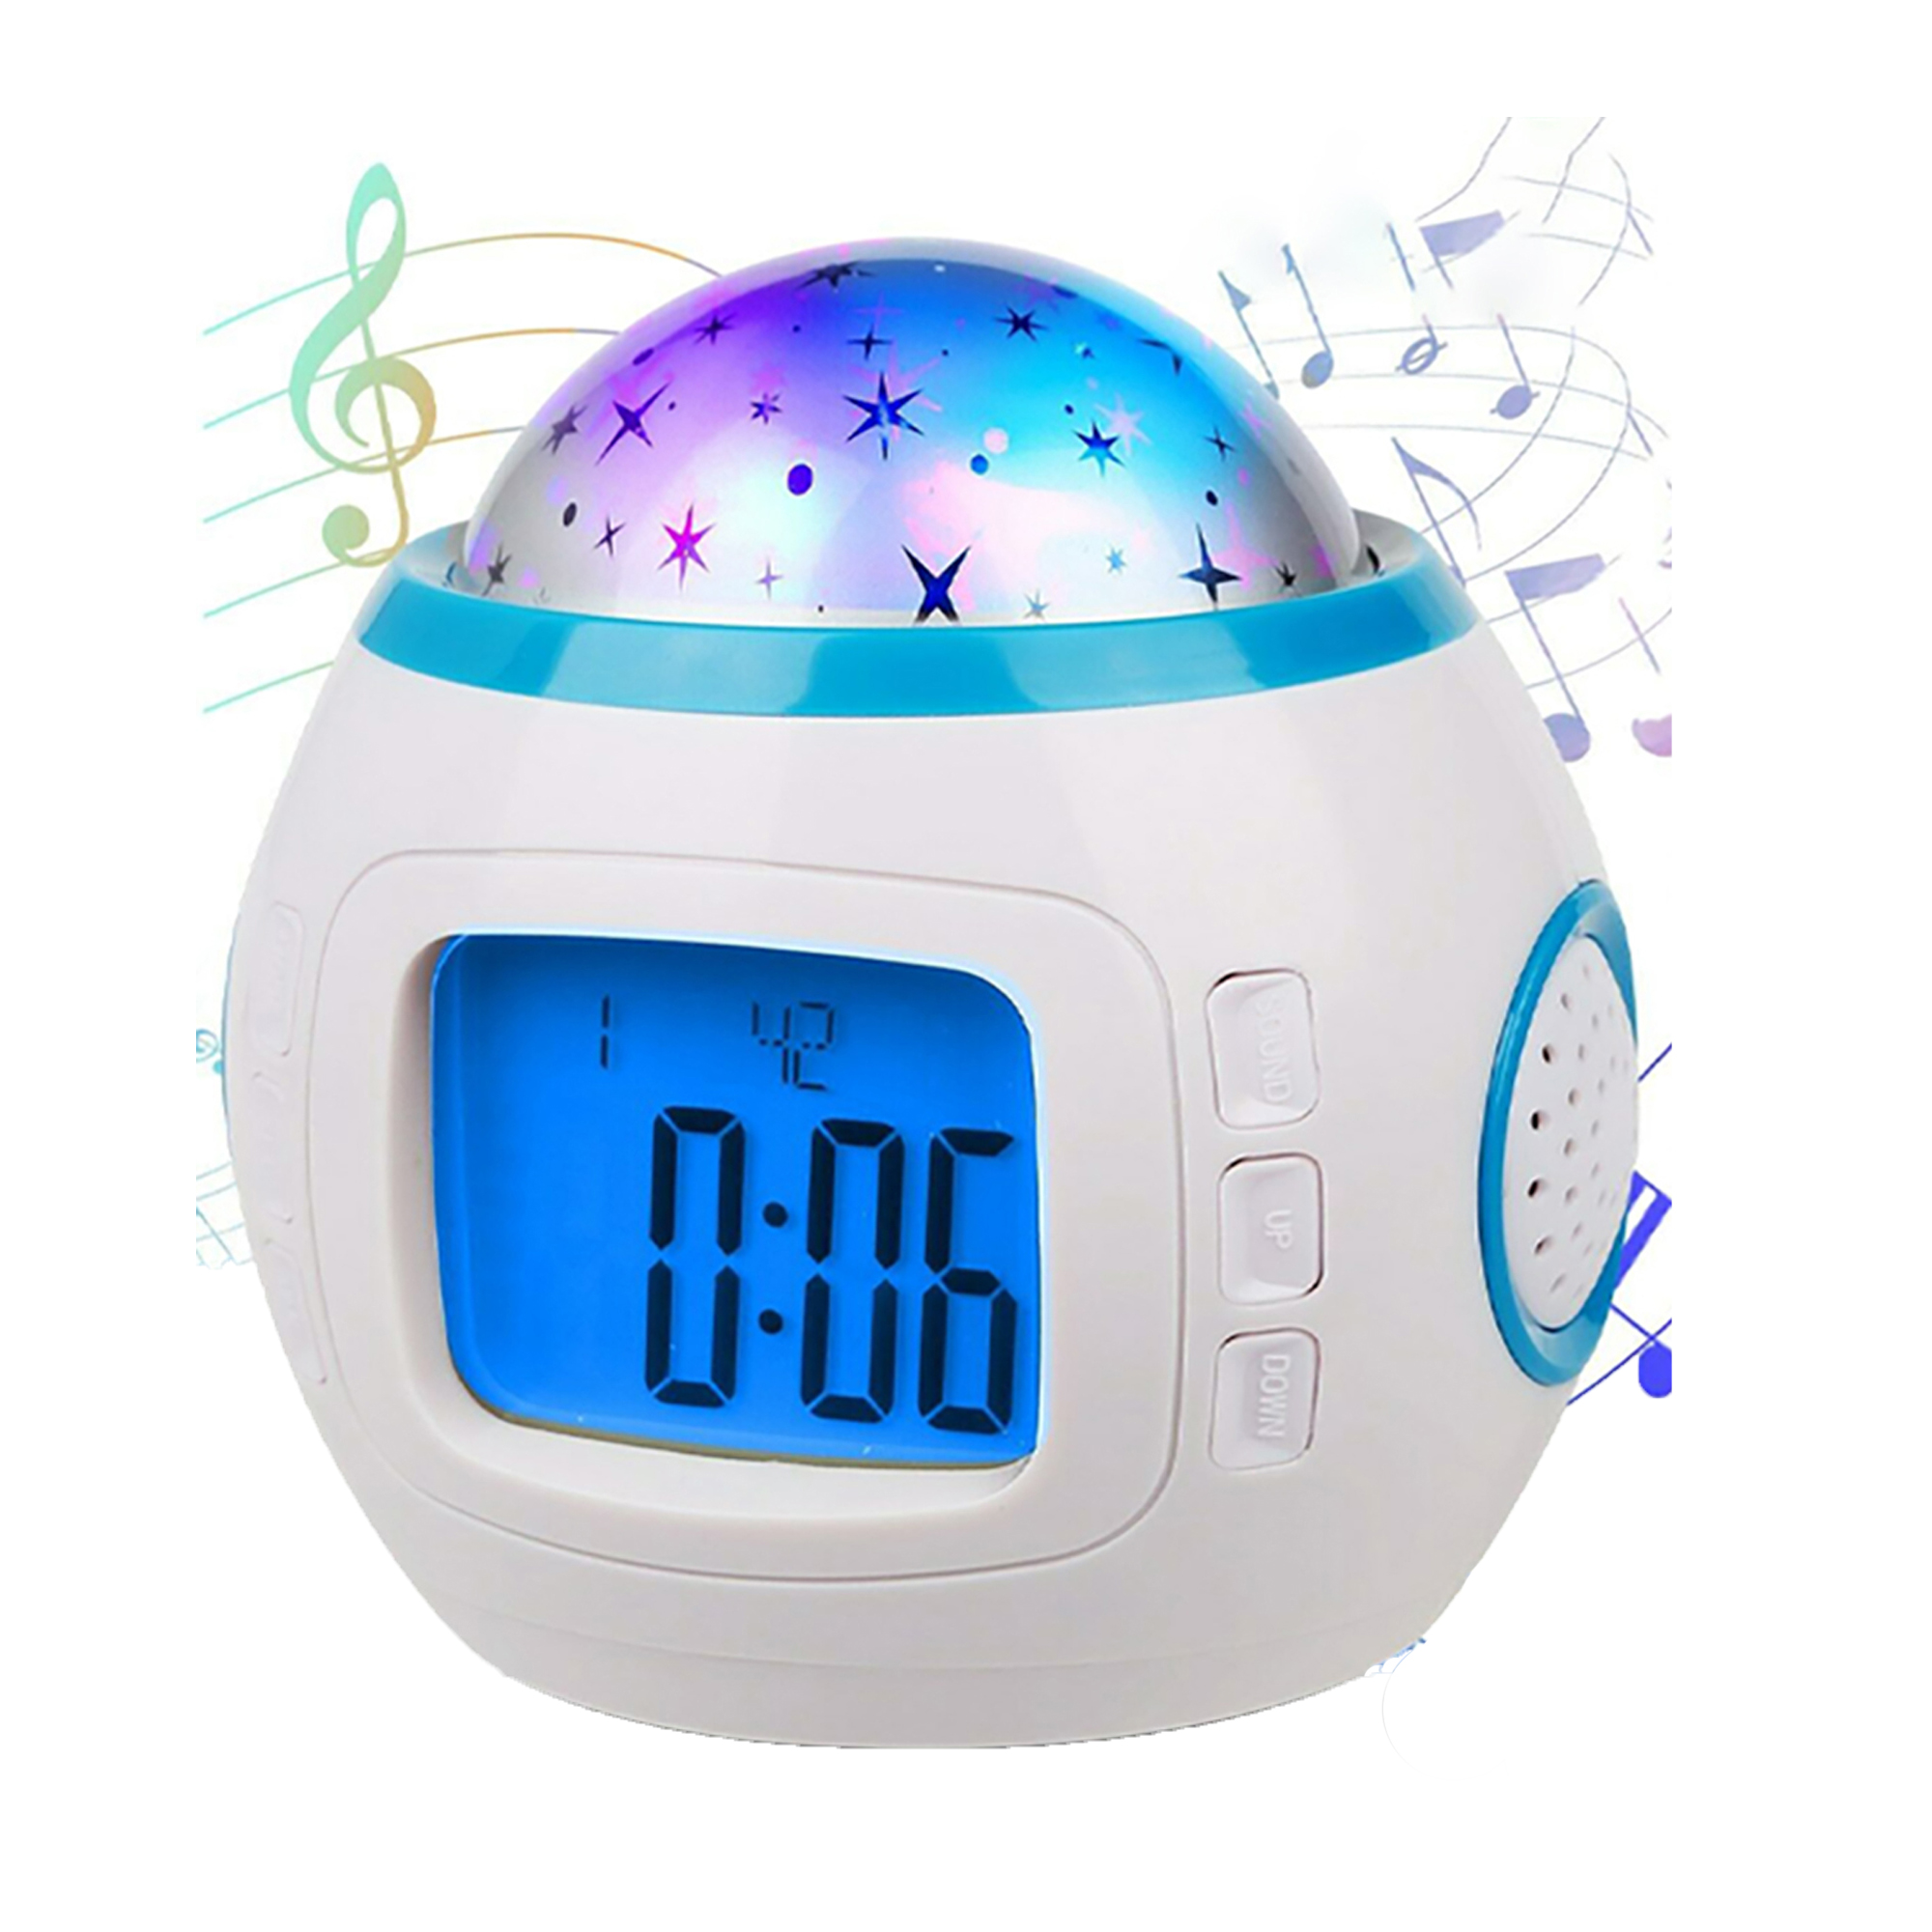 Dreamy Music Starry Sky Projector Alarm Clock Projection Night Light Desk Clock Calendar Children Gifts